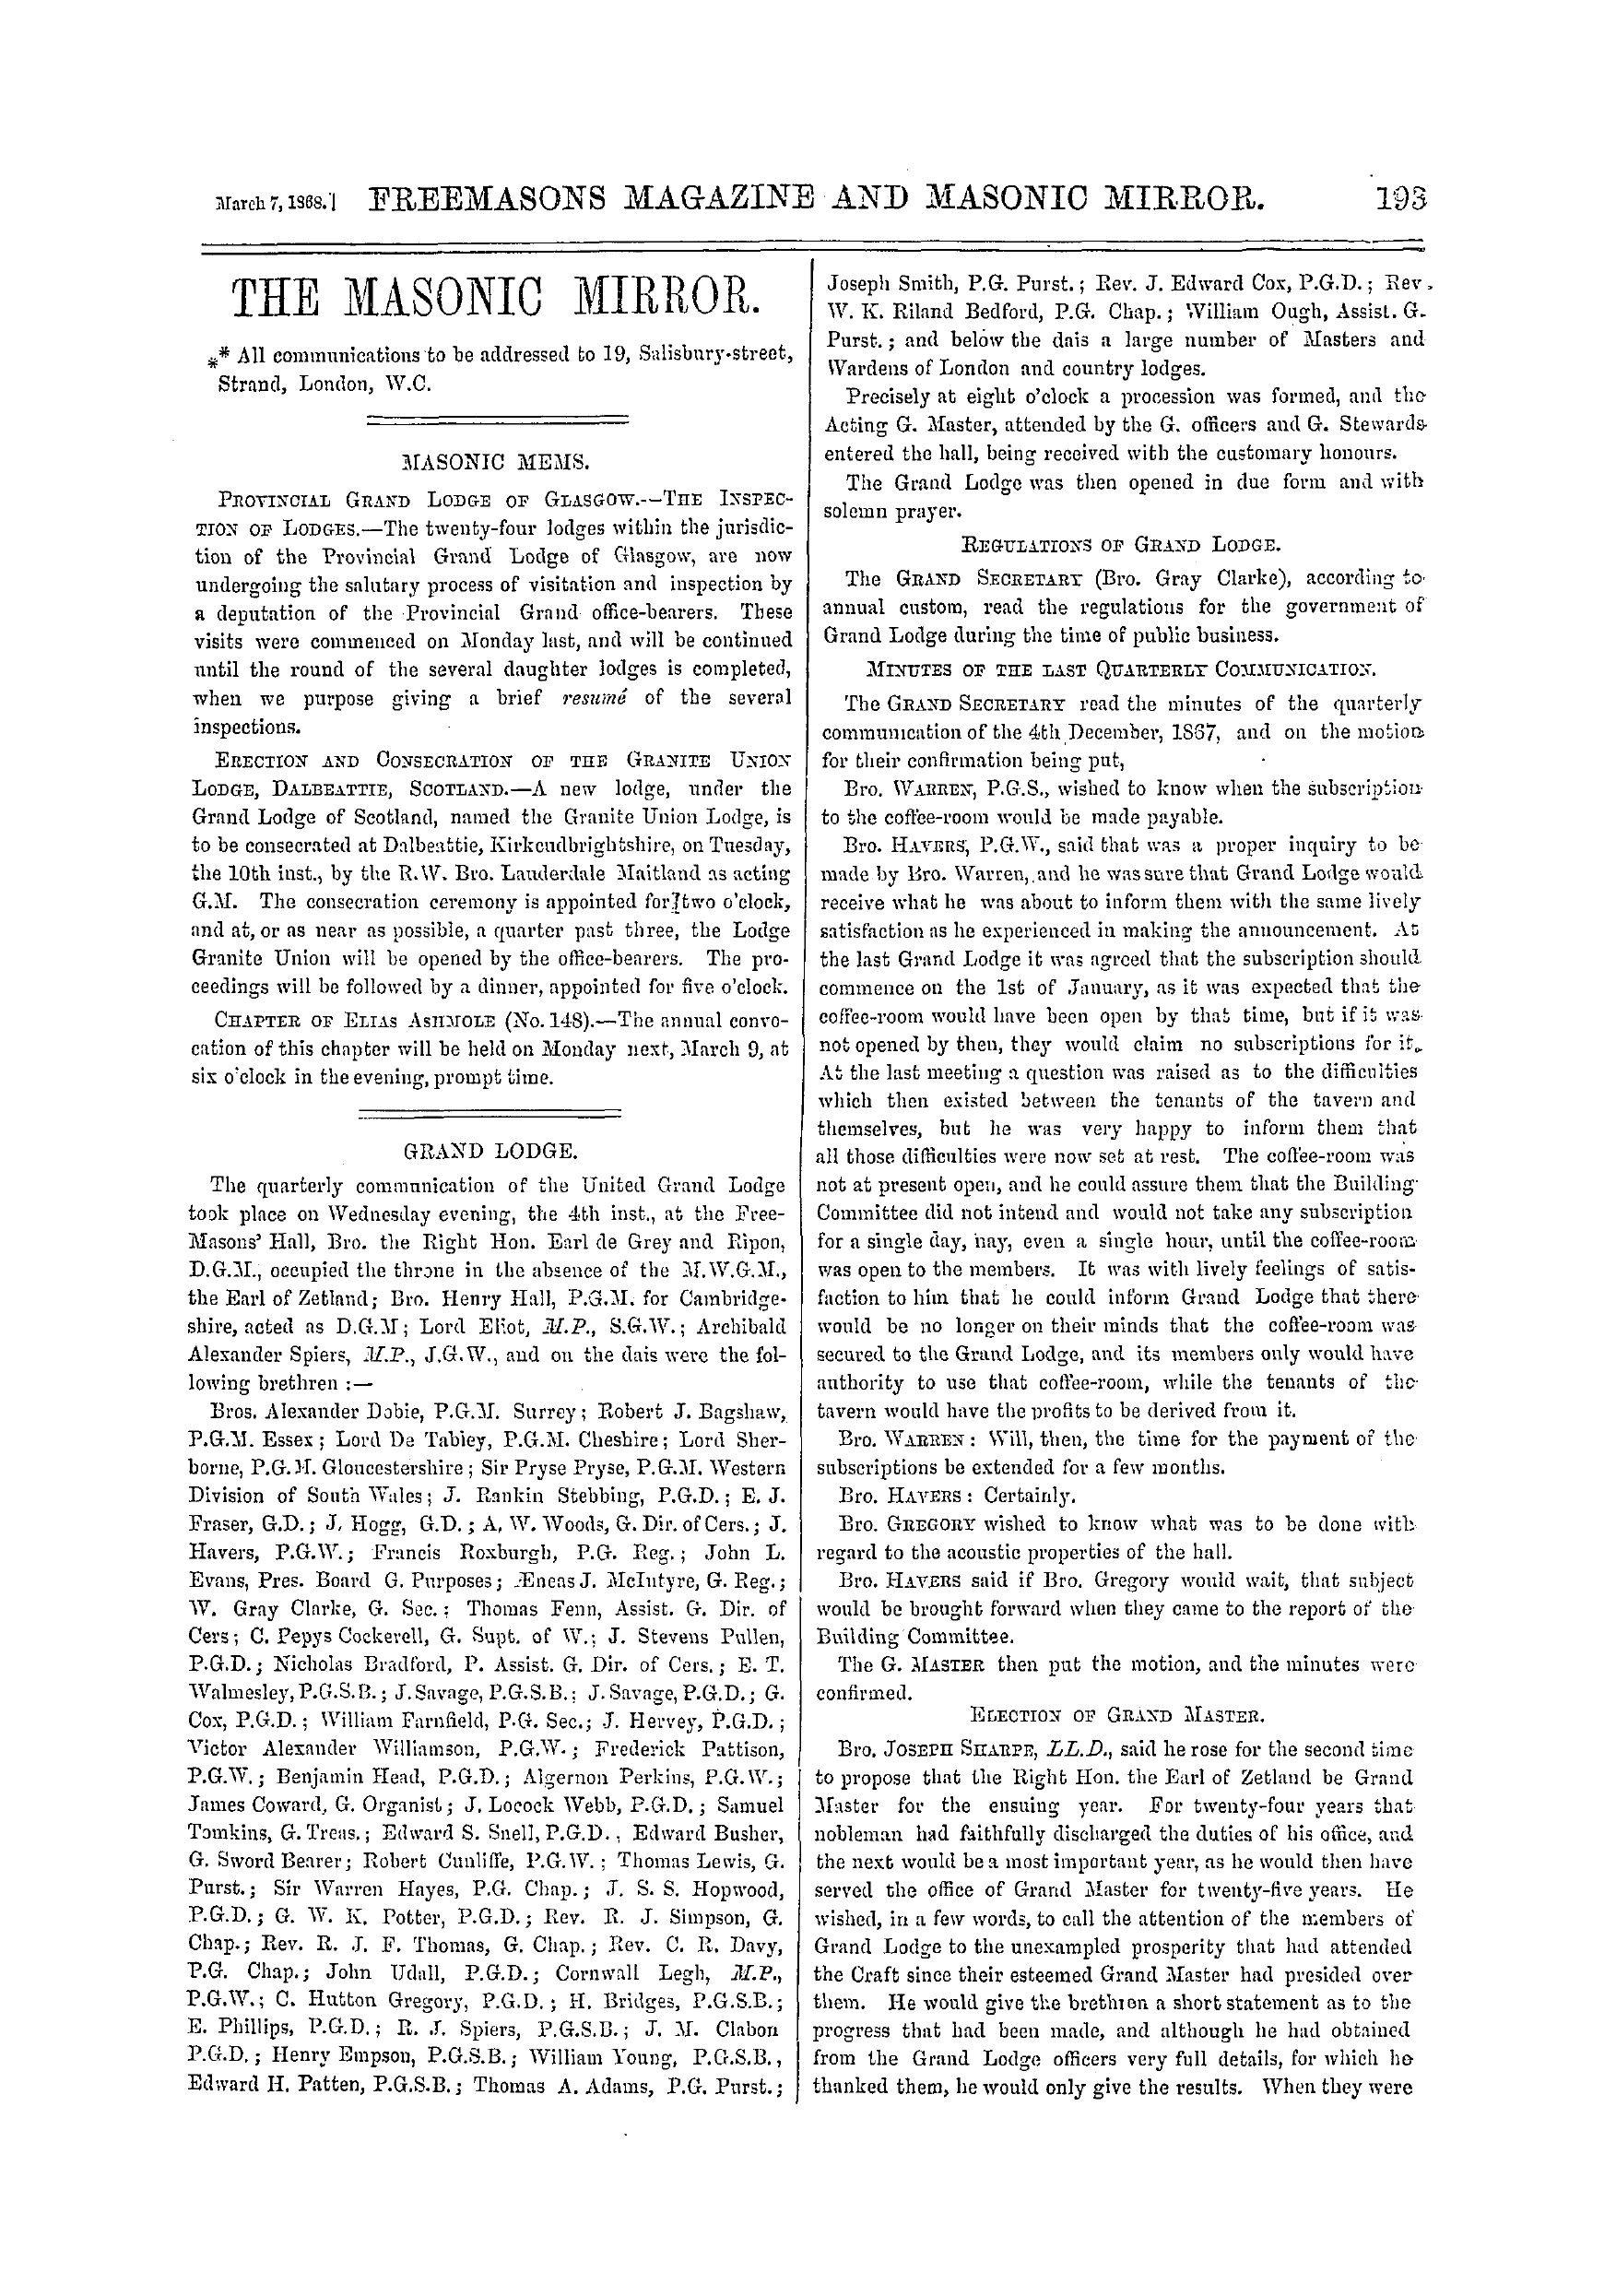 The Freemasons' Monthly Magazine: 1868-03-07 - Grand Lodge.